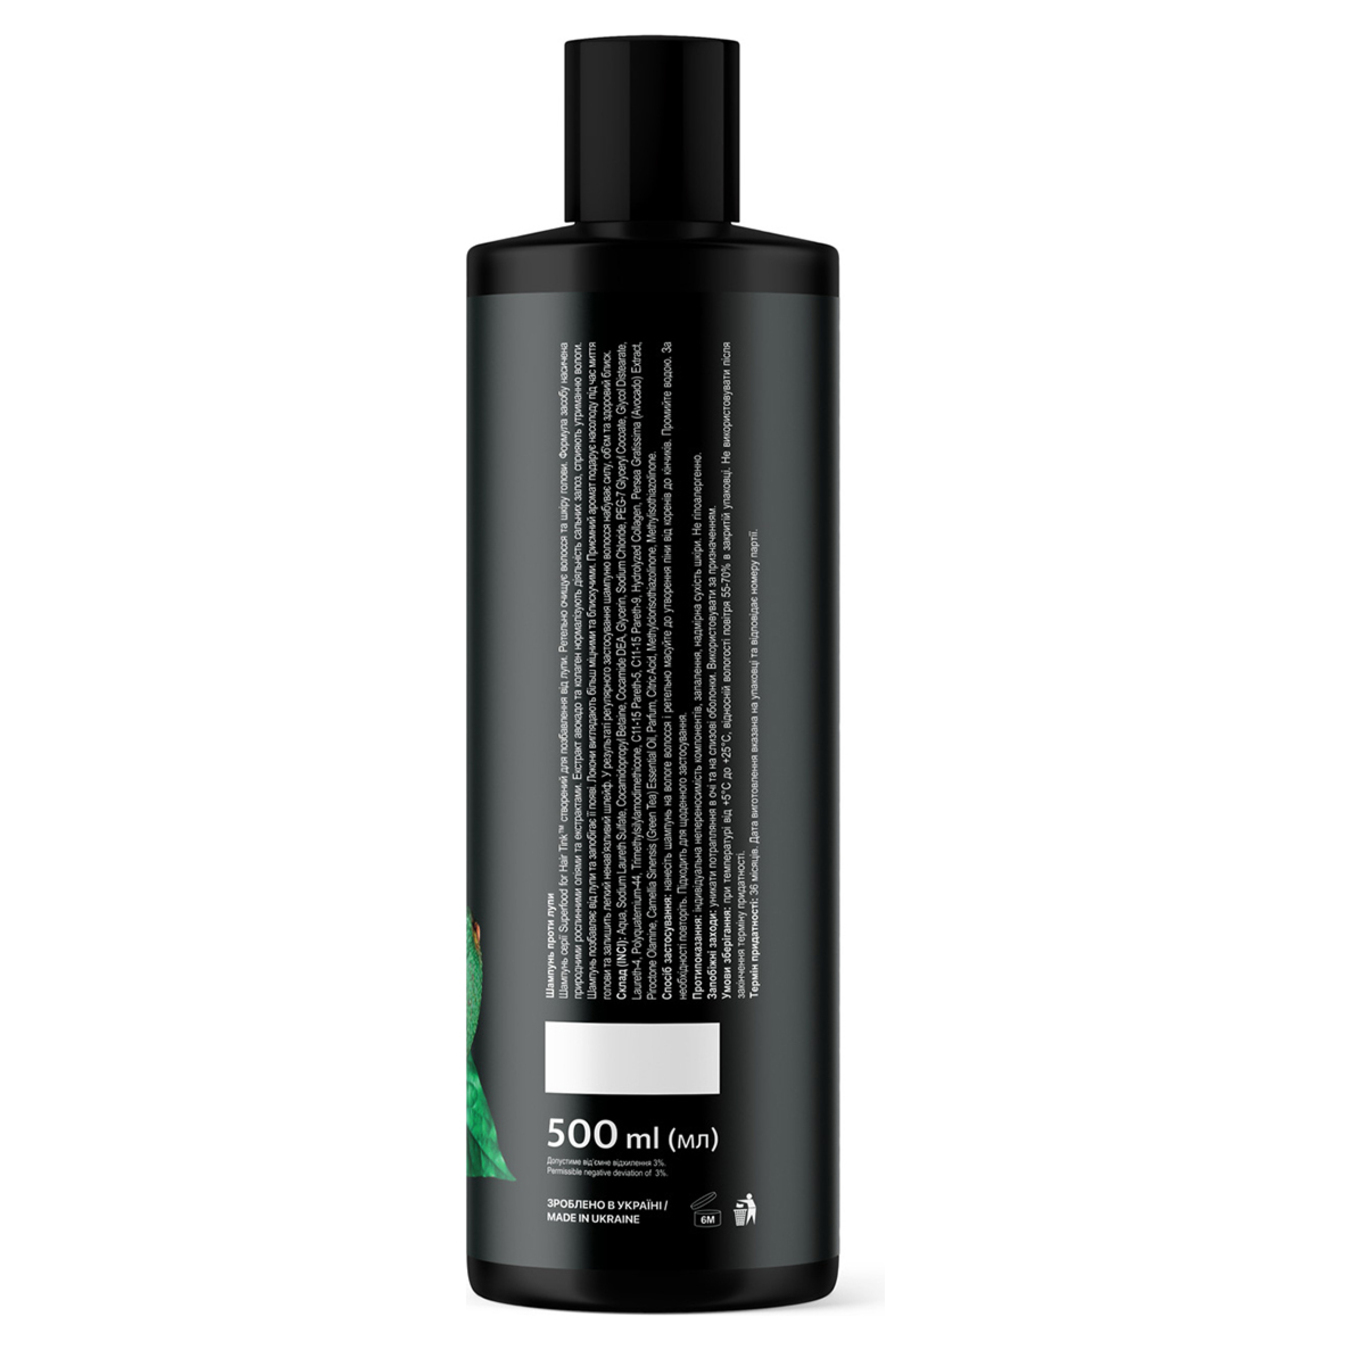 Shampoo Tink Avocado collagen against dandruff 500ml 2